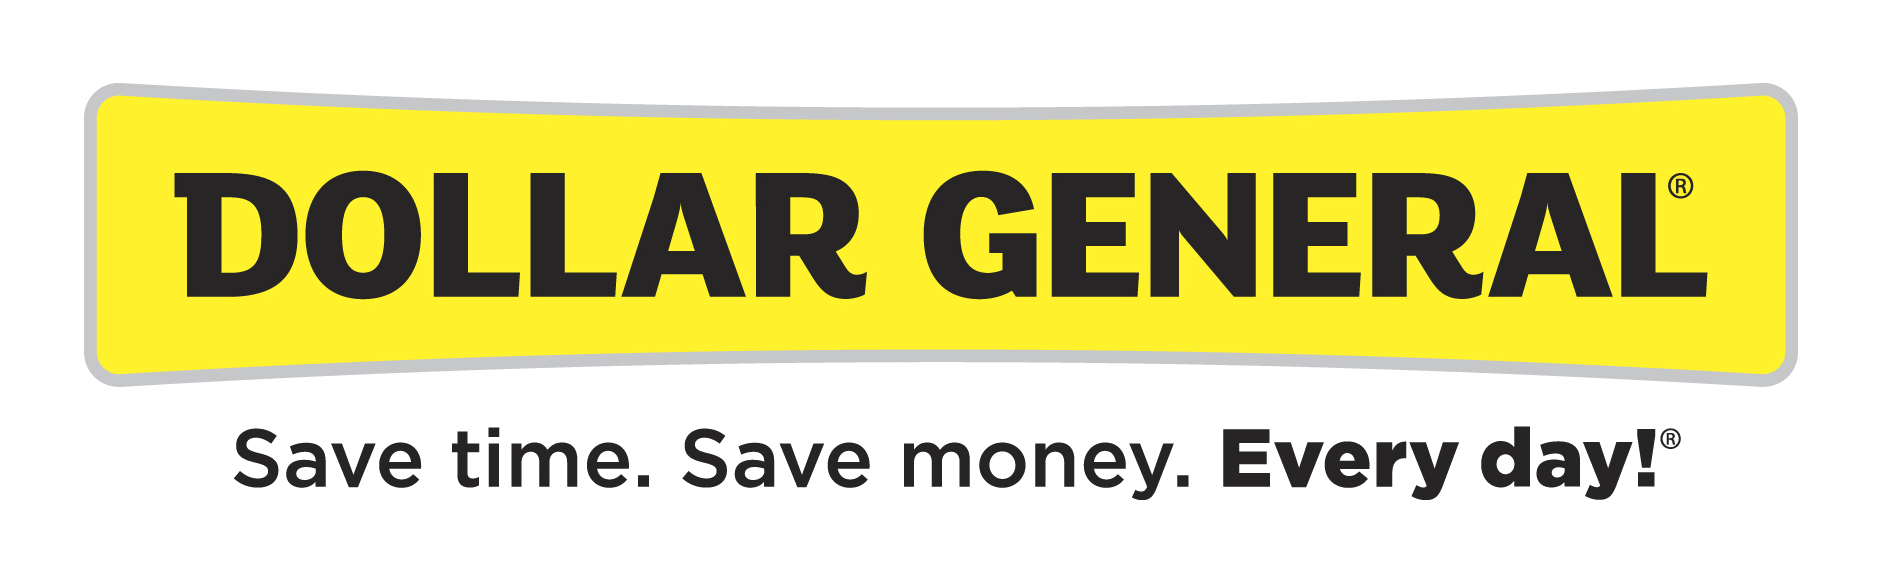 Download Dollar General Logo Png Image For Free